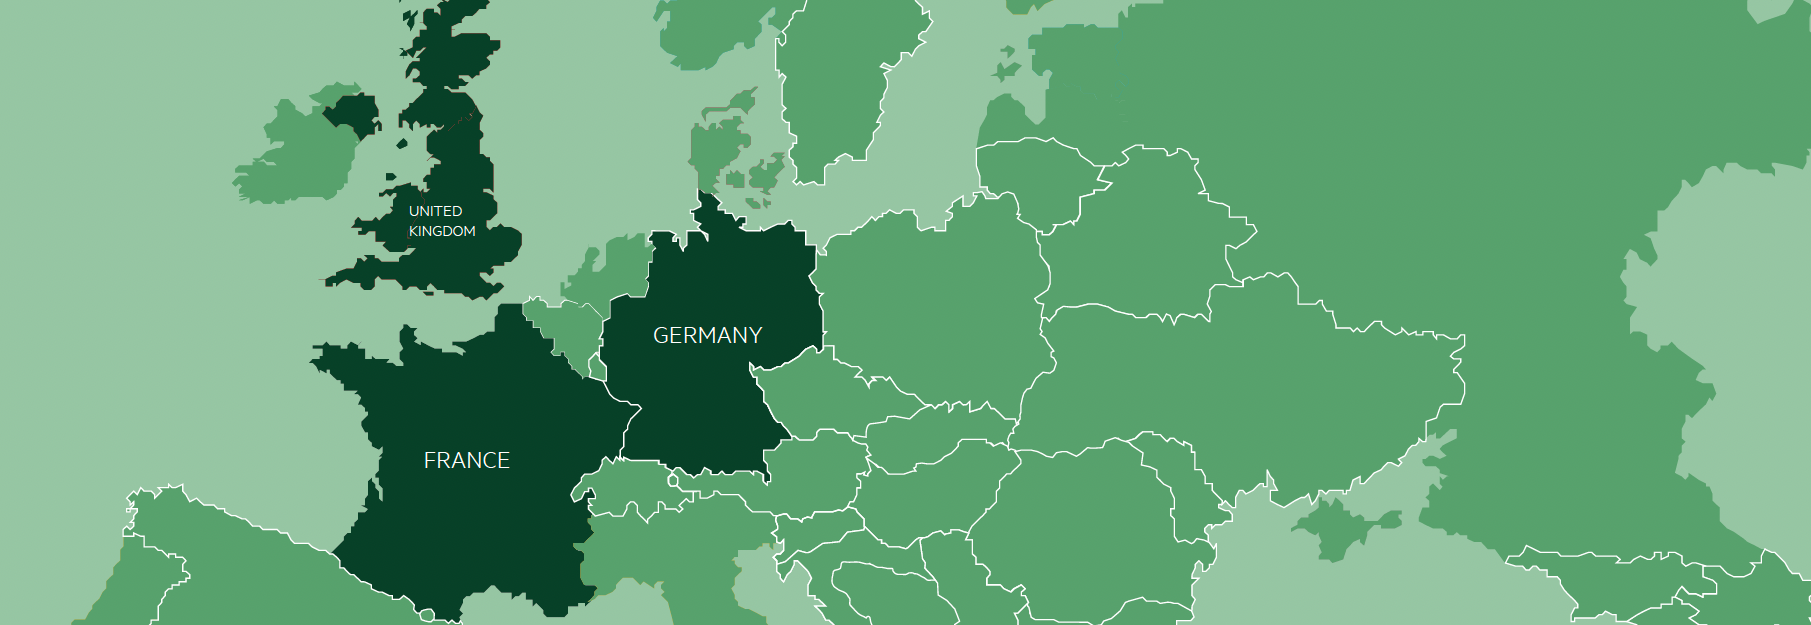 Map of Salesloft Study in Europe